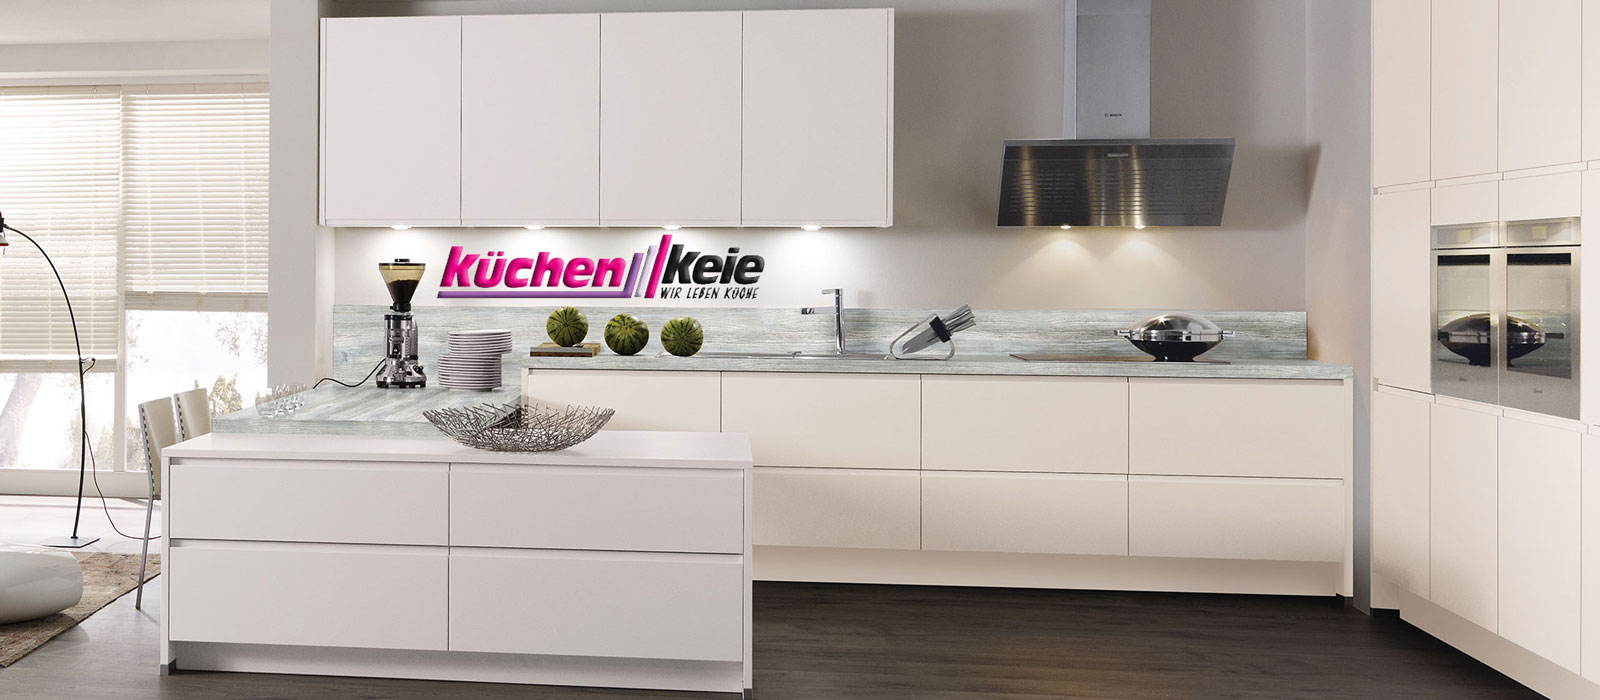 kuechenguide.com-kuechen-keie-banner